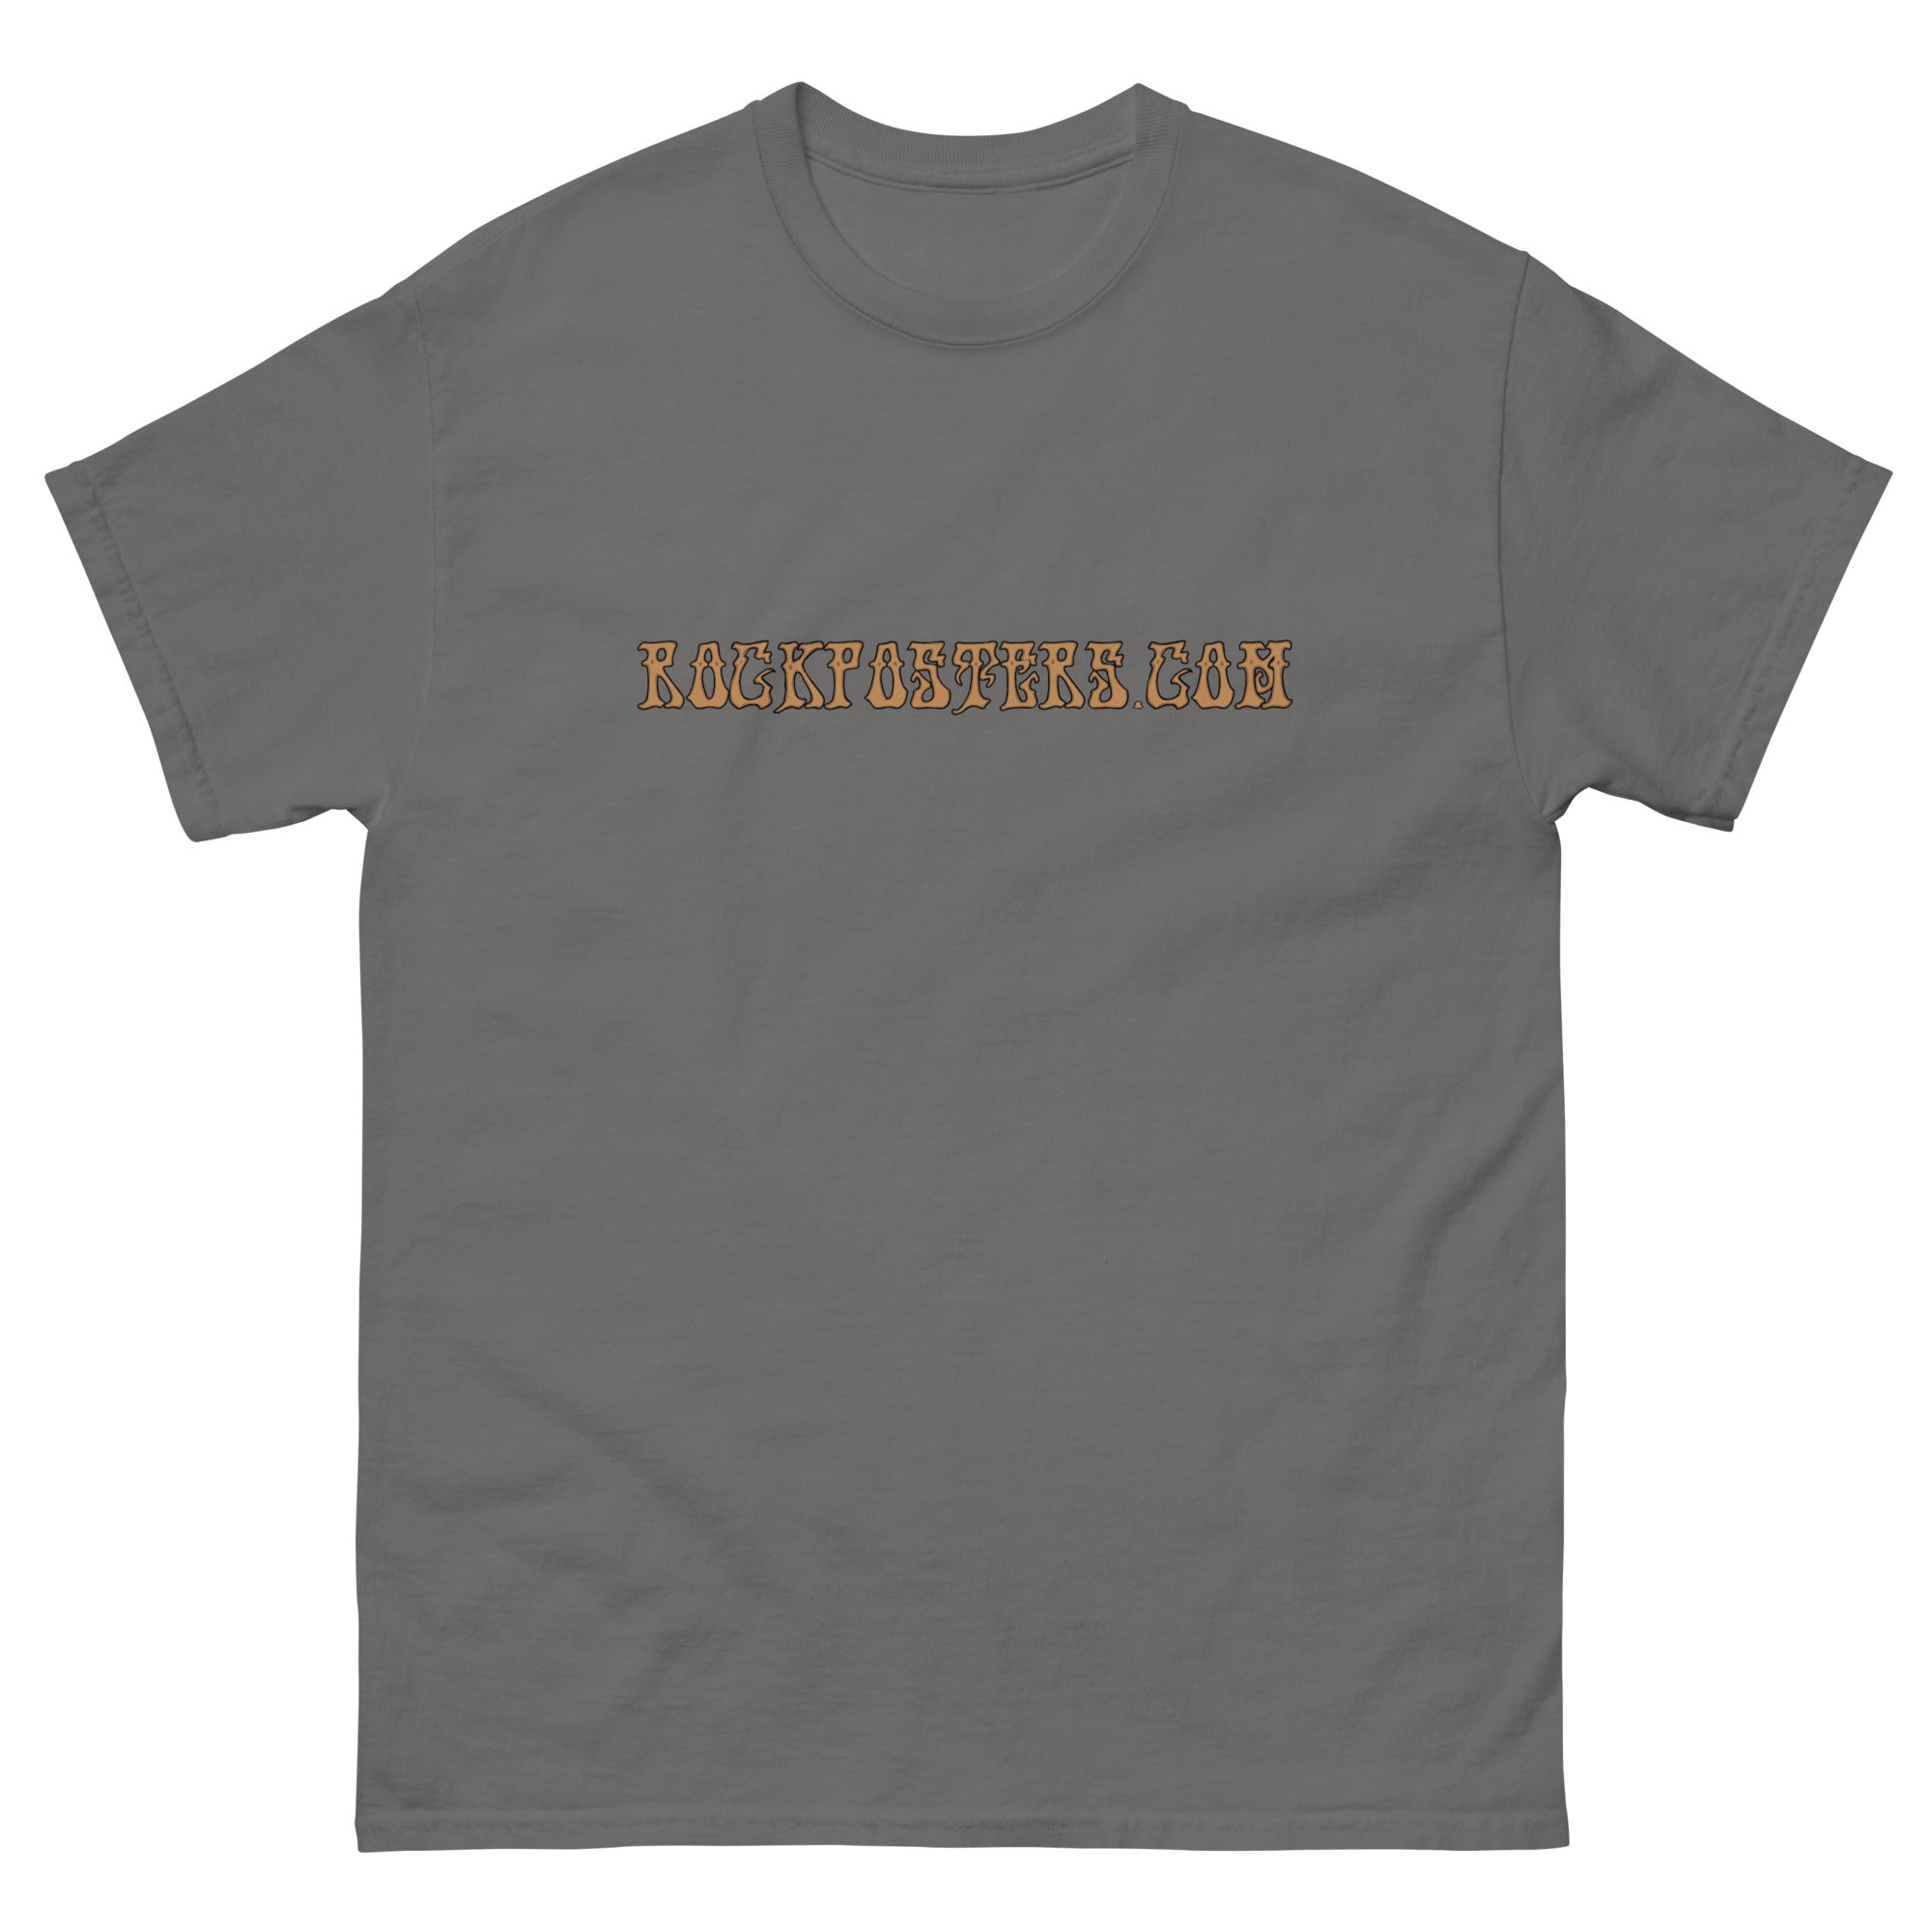 Rockposters.com - Griff Script Men's T-Shirt - Charcoal